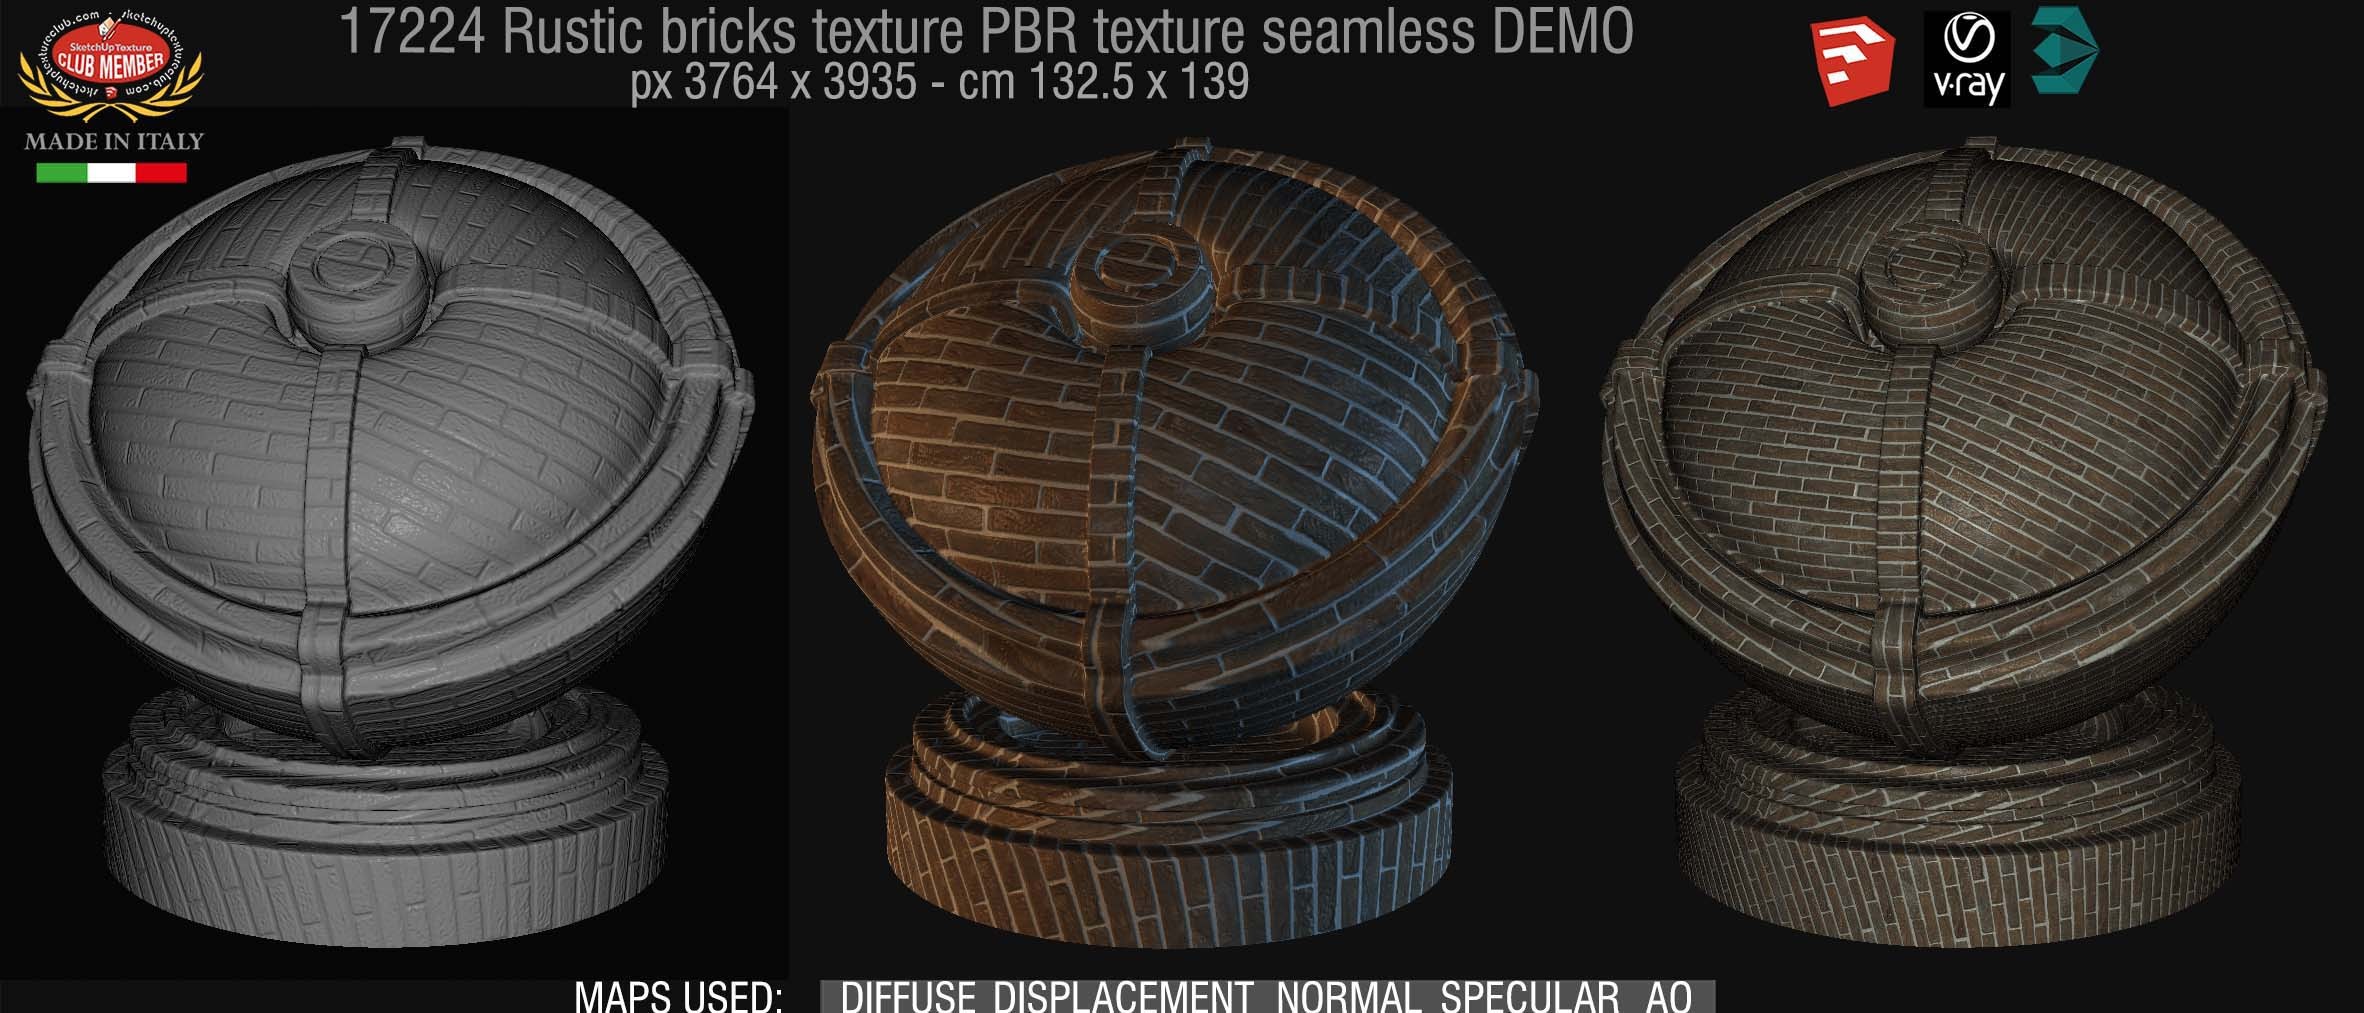 17224 rustic bricks PBR texture seamless DEMO